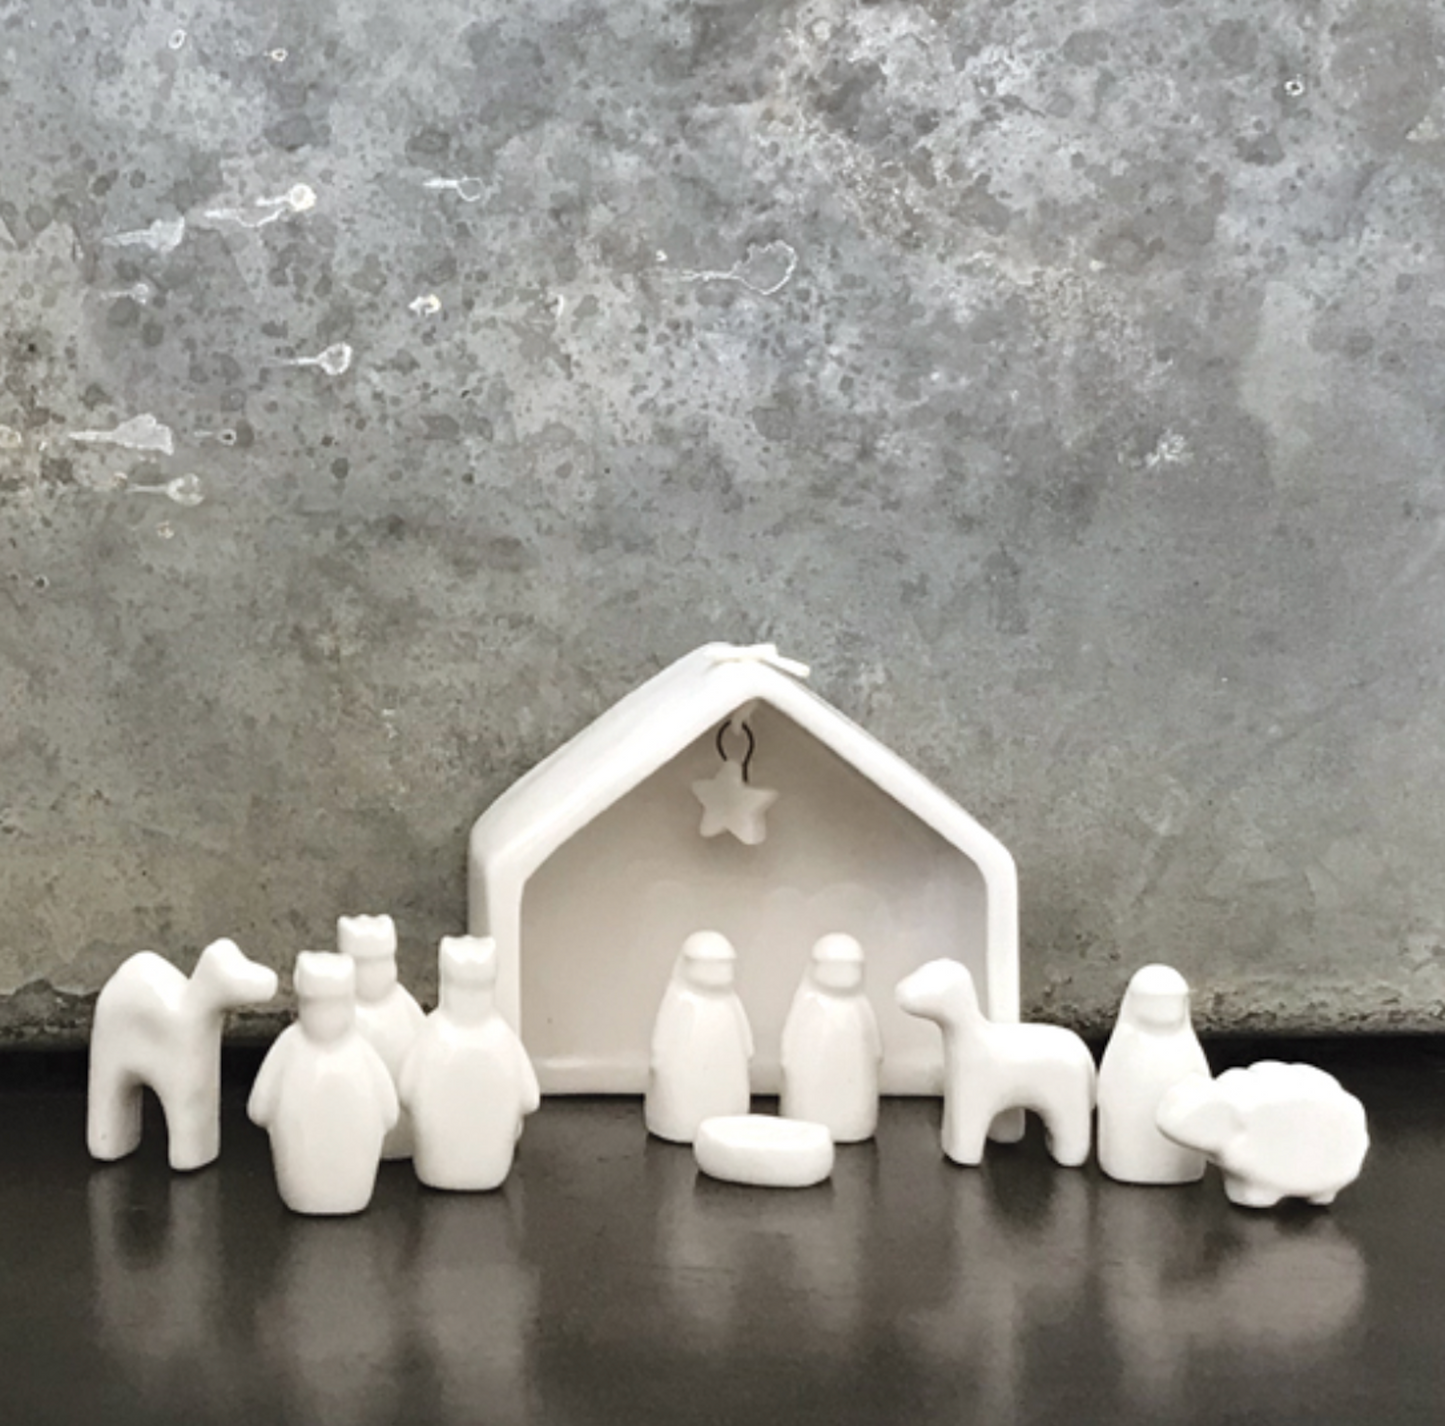 Porcelain Christmas Nativity Set